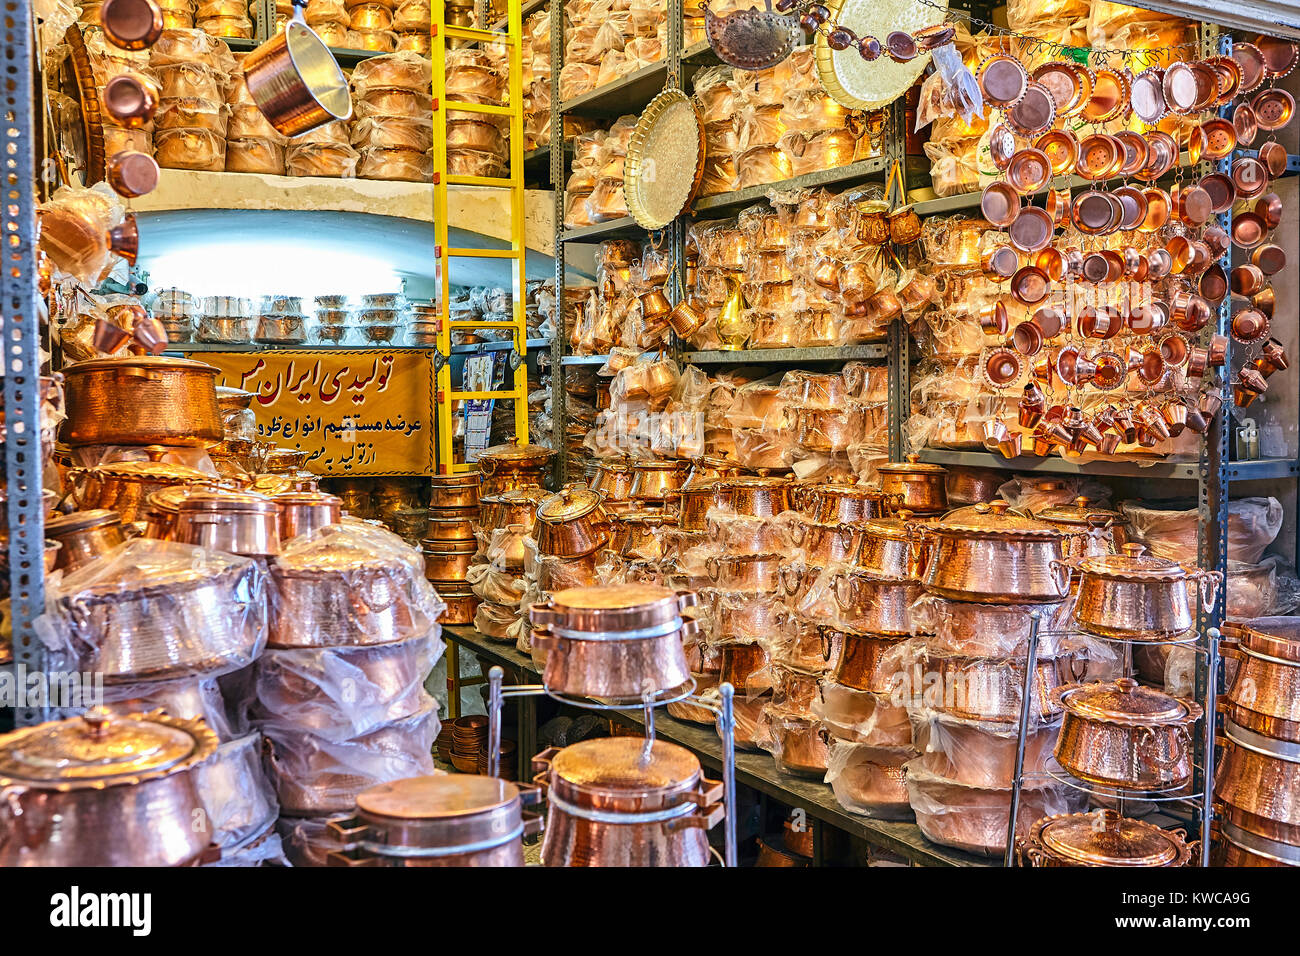 https://c8.alamy.com/comp/KWCA9G/copper-and-brass-utensils-in-the-eastern-bazaar-in-yazd-iran-KWCA9G.jpg